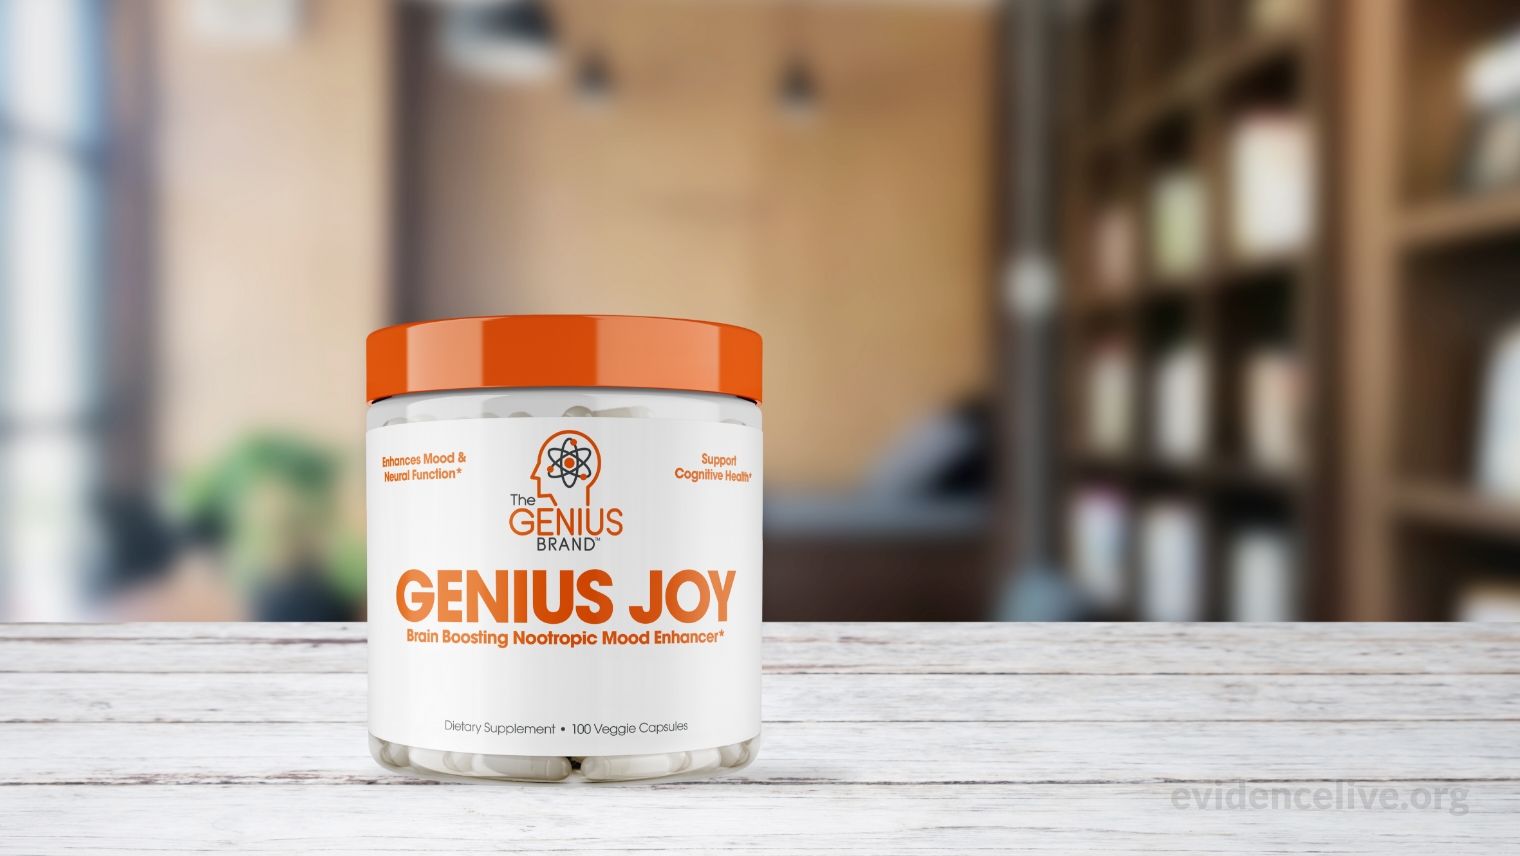 Genius Joy benefits and effects